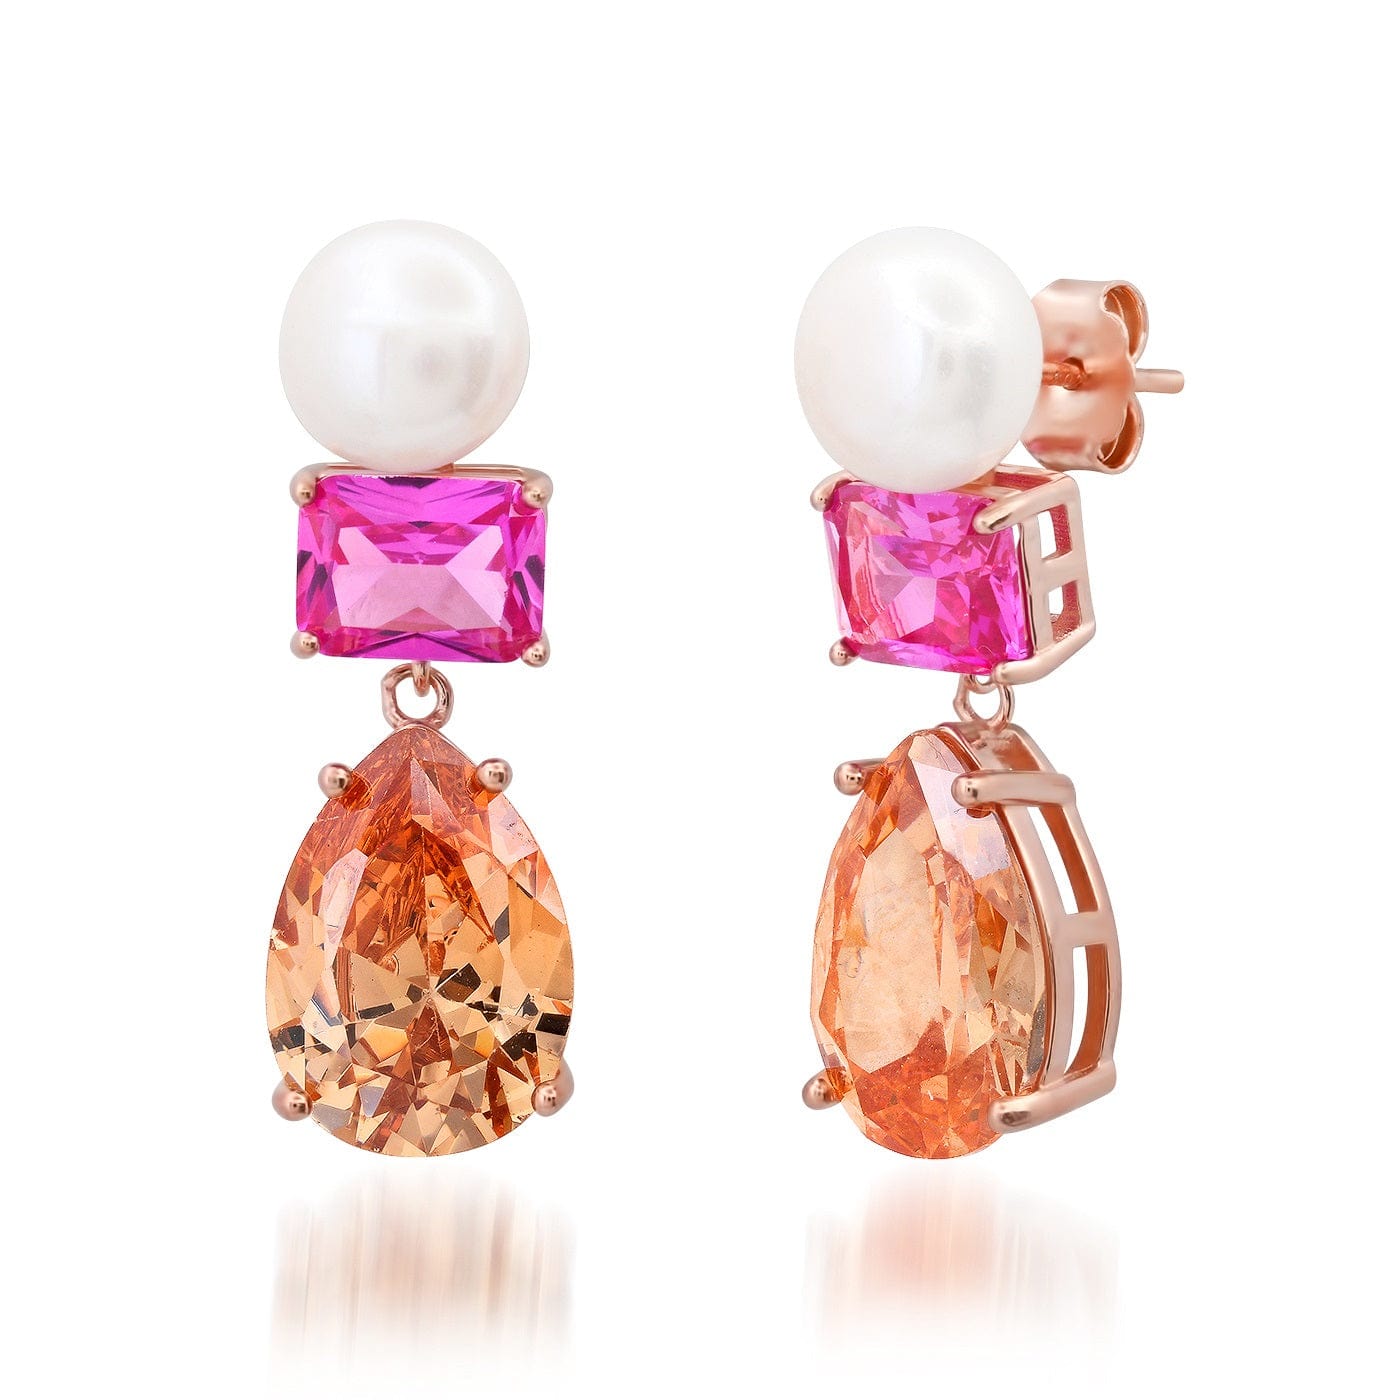 TAI JEWELRY Earrings Champagne Pear and Pearl Drop Earrings